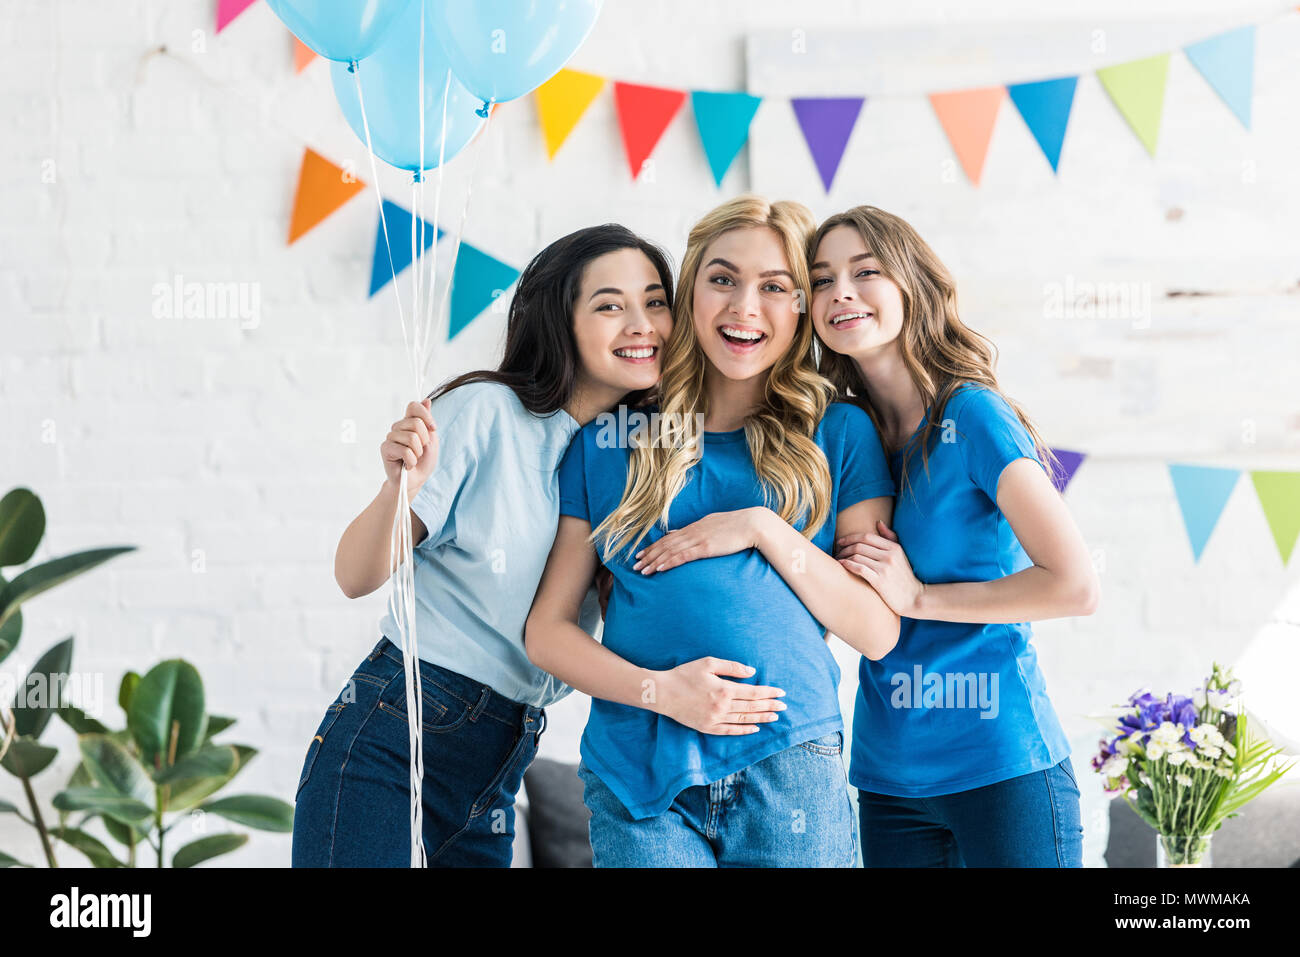 alia bhatt baby shower: Inside pictures from Alia Bhatt's baby shower! |  EconomicTimes